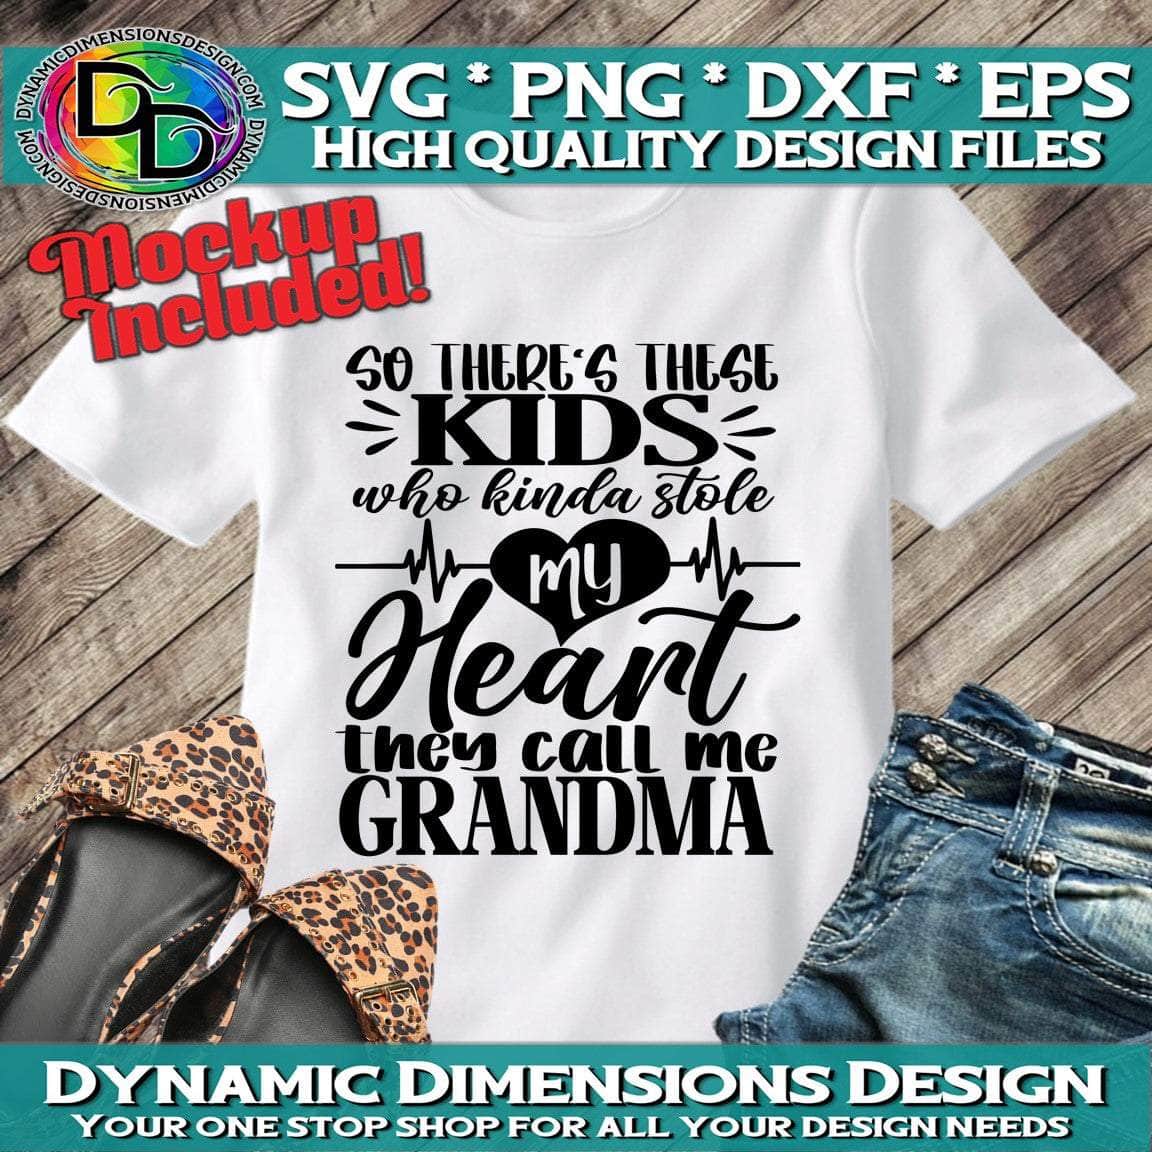 Kids Stole My Heart _ Calls me Grandma svg, png, instant download, dxf, eps, pdf, jpg, cricut, silhouette, sublimtion, printable